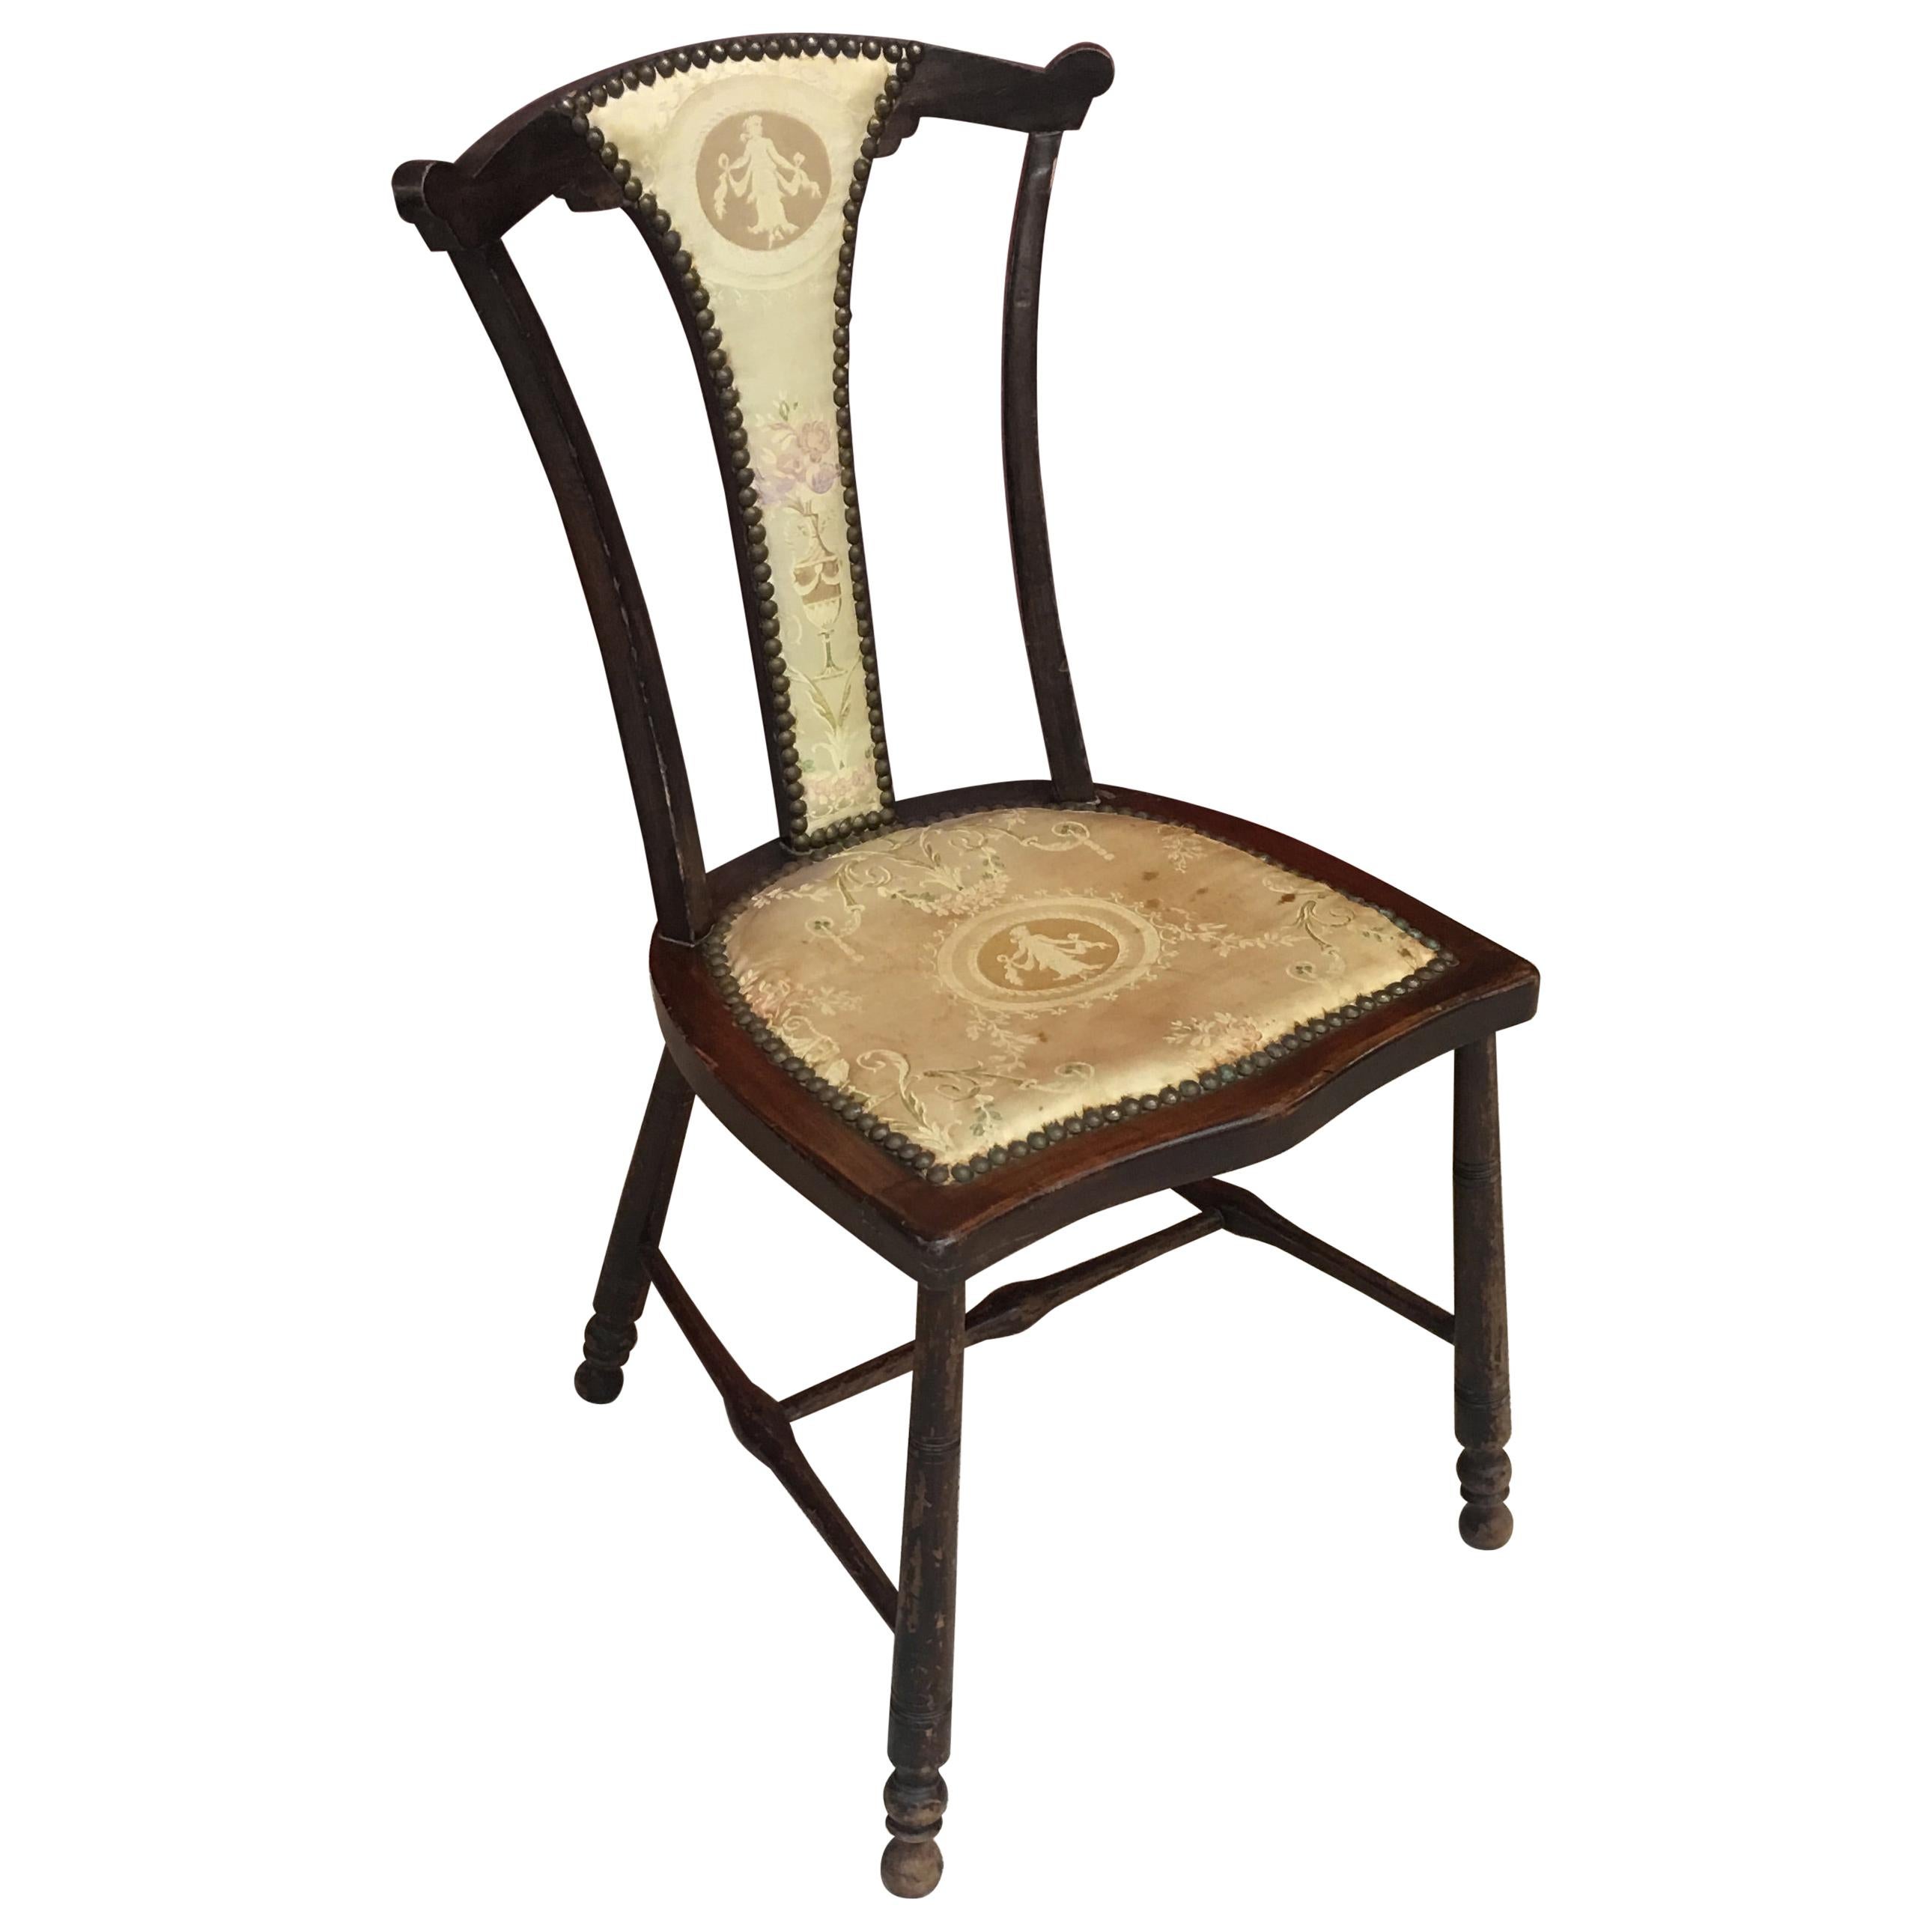 Charming Little English Chair circa 1900 Beautiful Original Fabric to Net